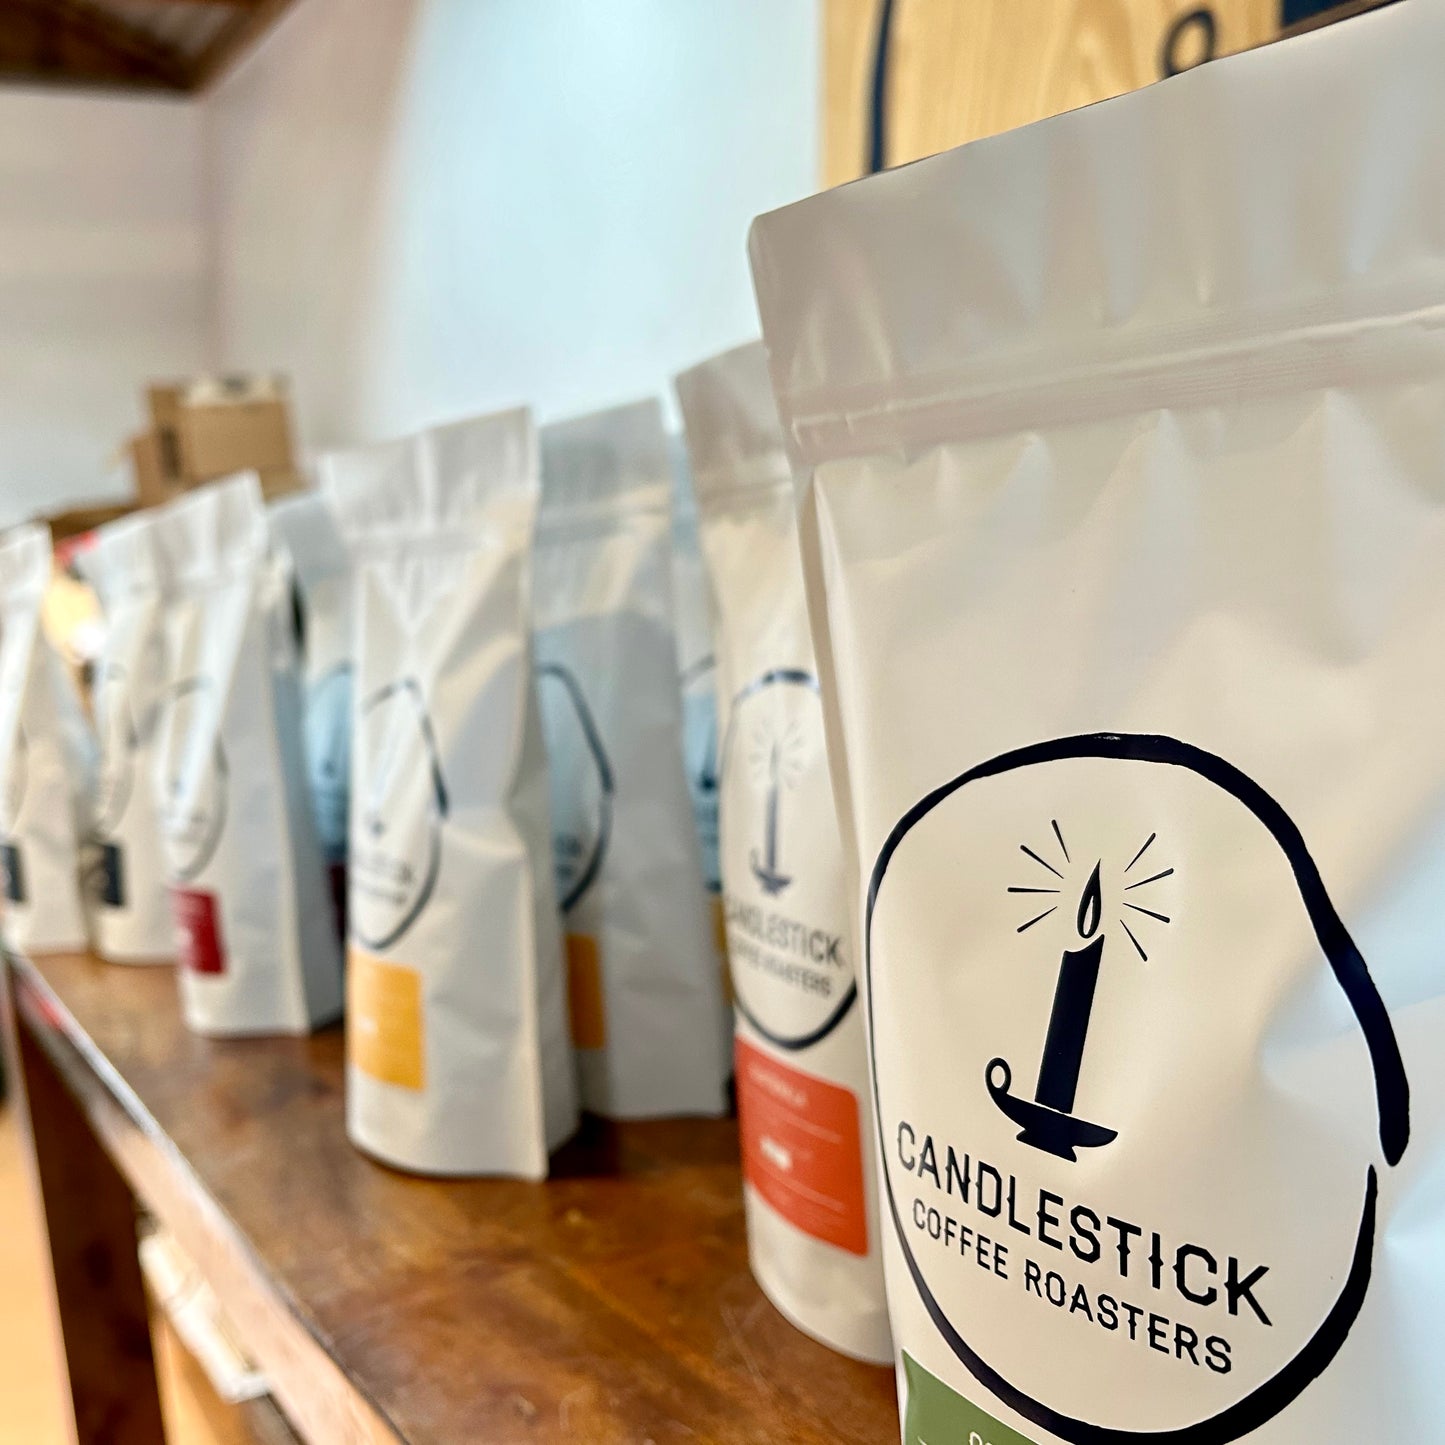 Candlestick Coffee: Farm Stand Roast